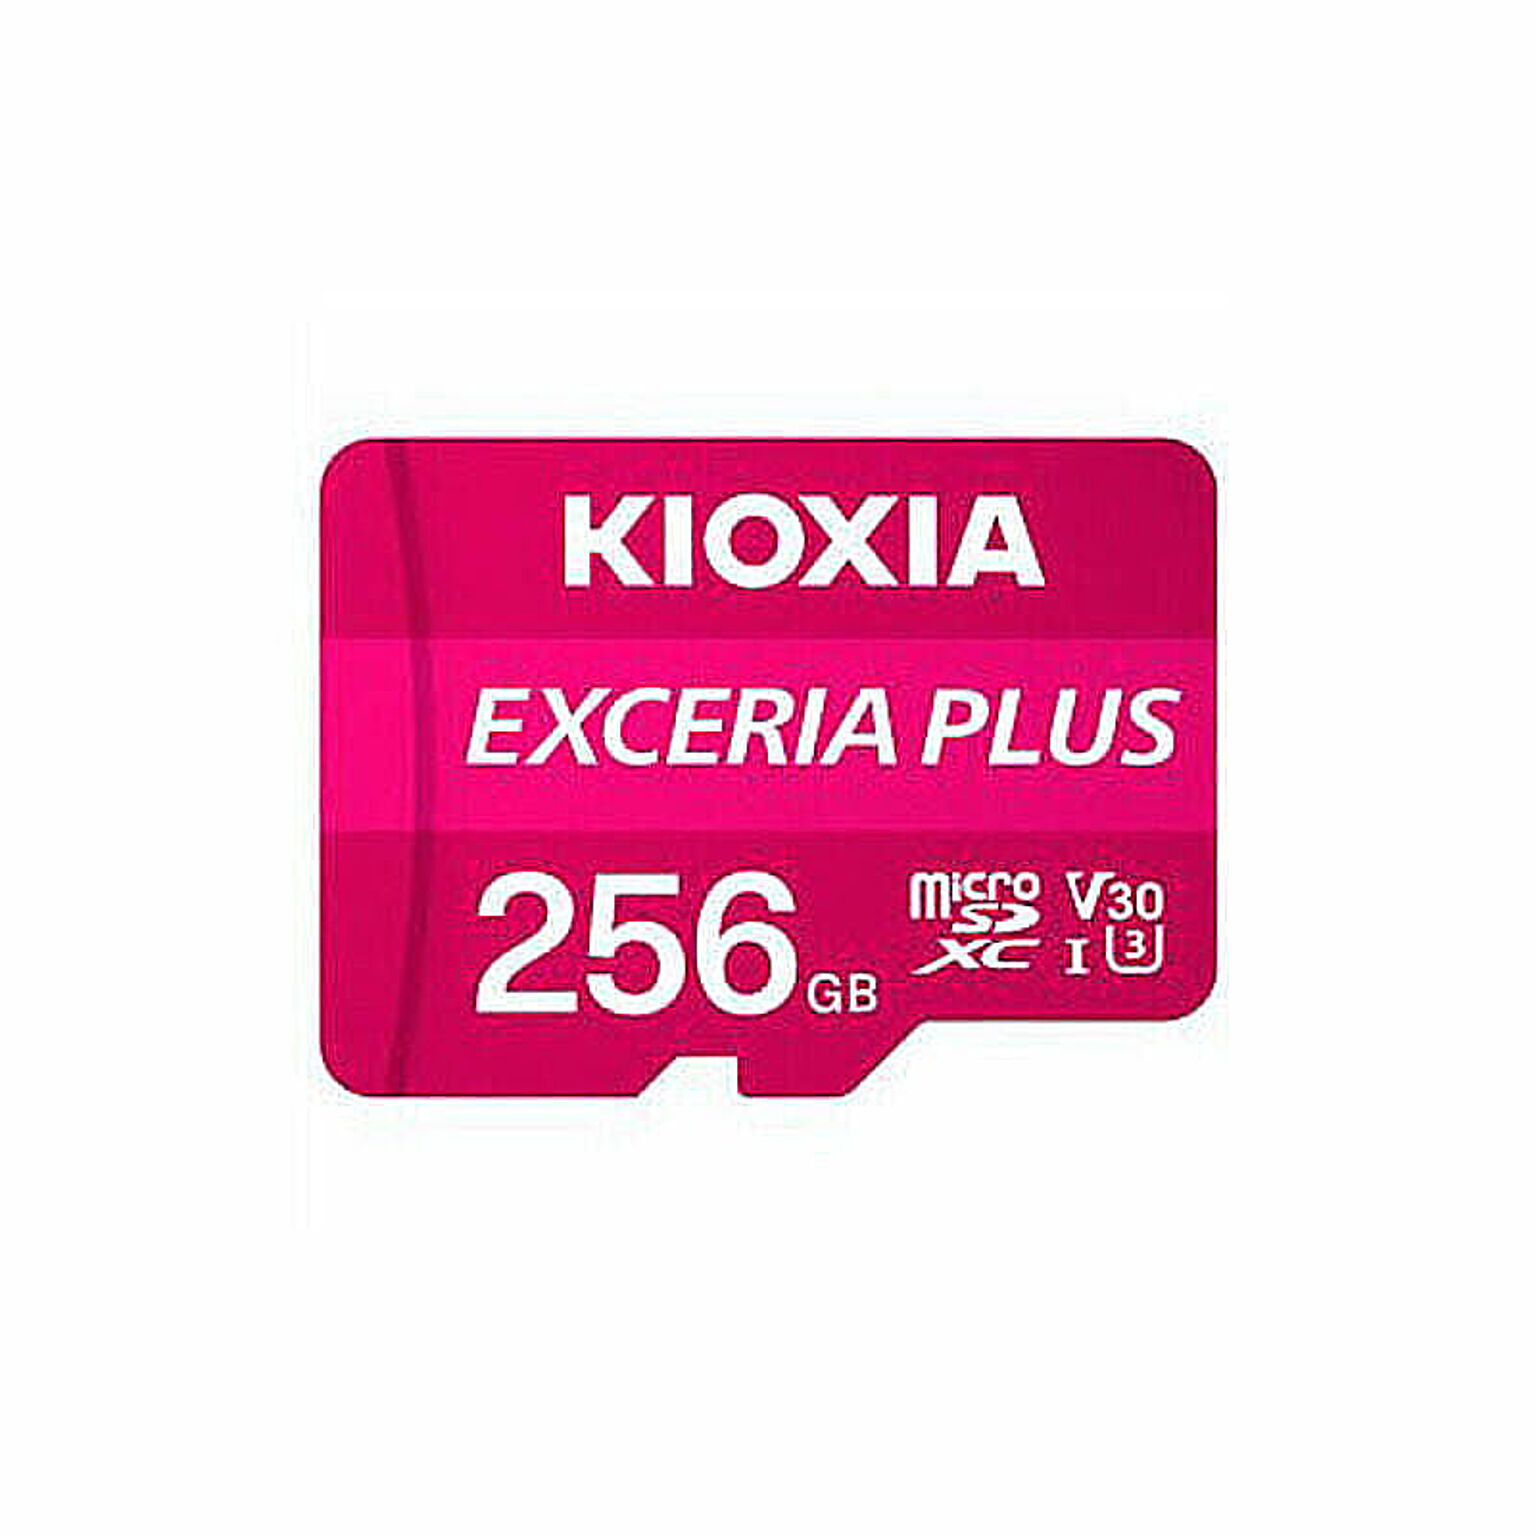 KIOXIA MicroSDカード EXERIA PLUS 256GB KMUH-A256G 管理No. 4582563851122